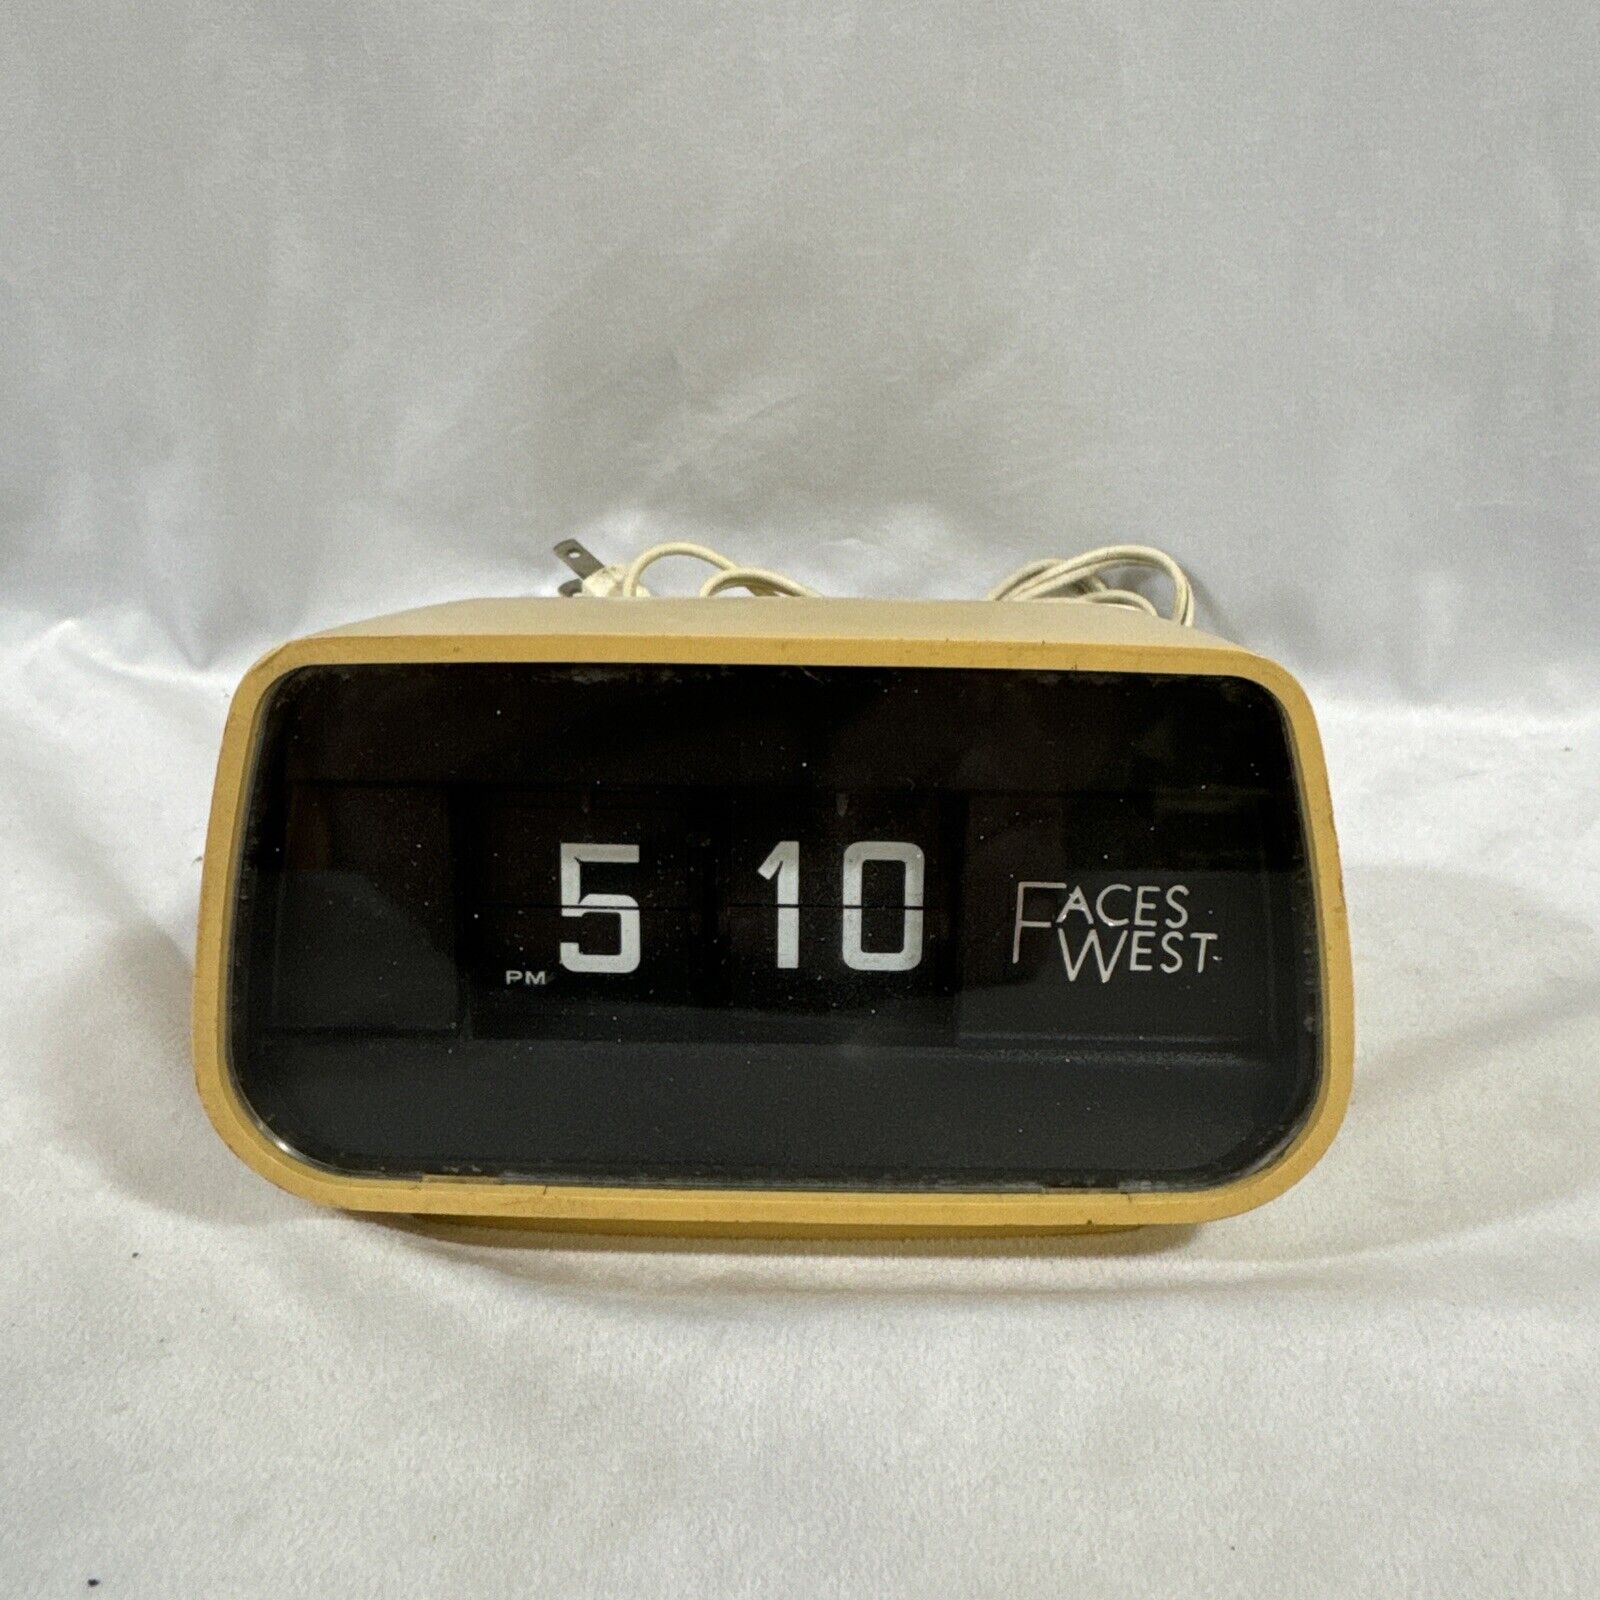 Vintage Ricoh FLIP Digital Clock Model 3600 MCM - Working